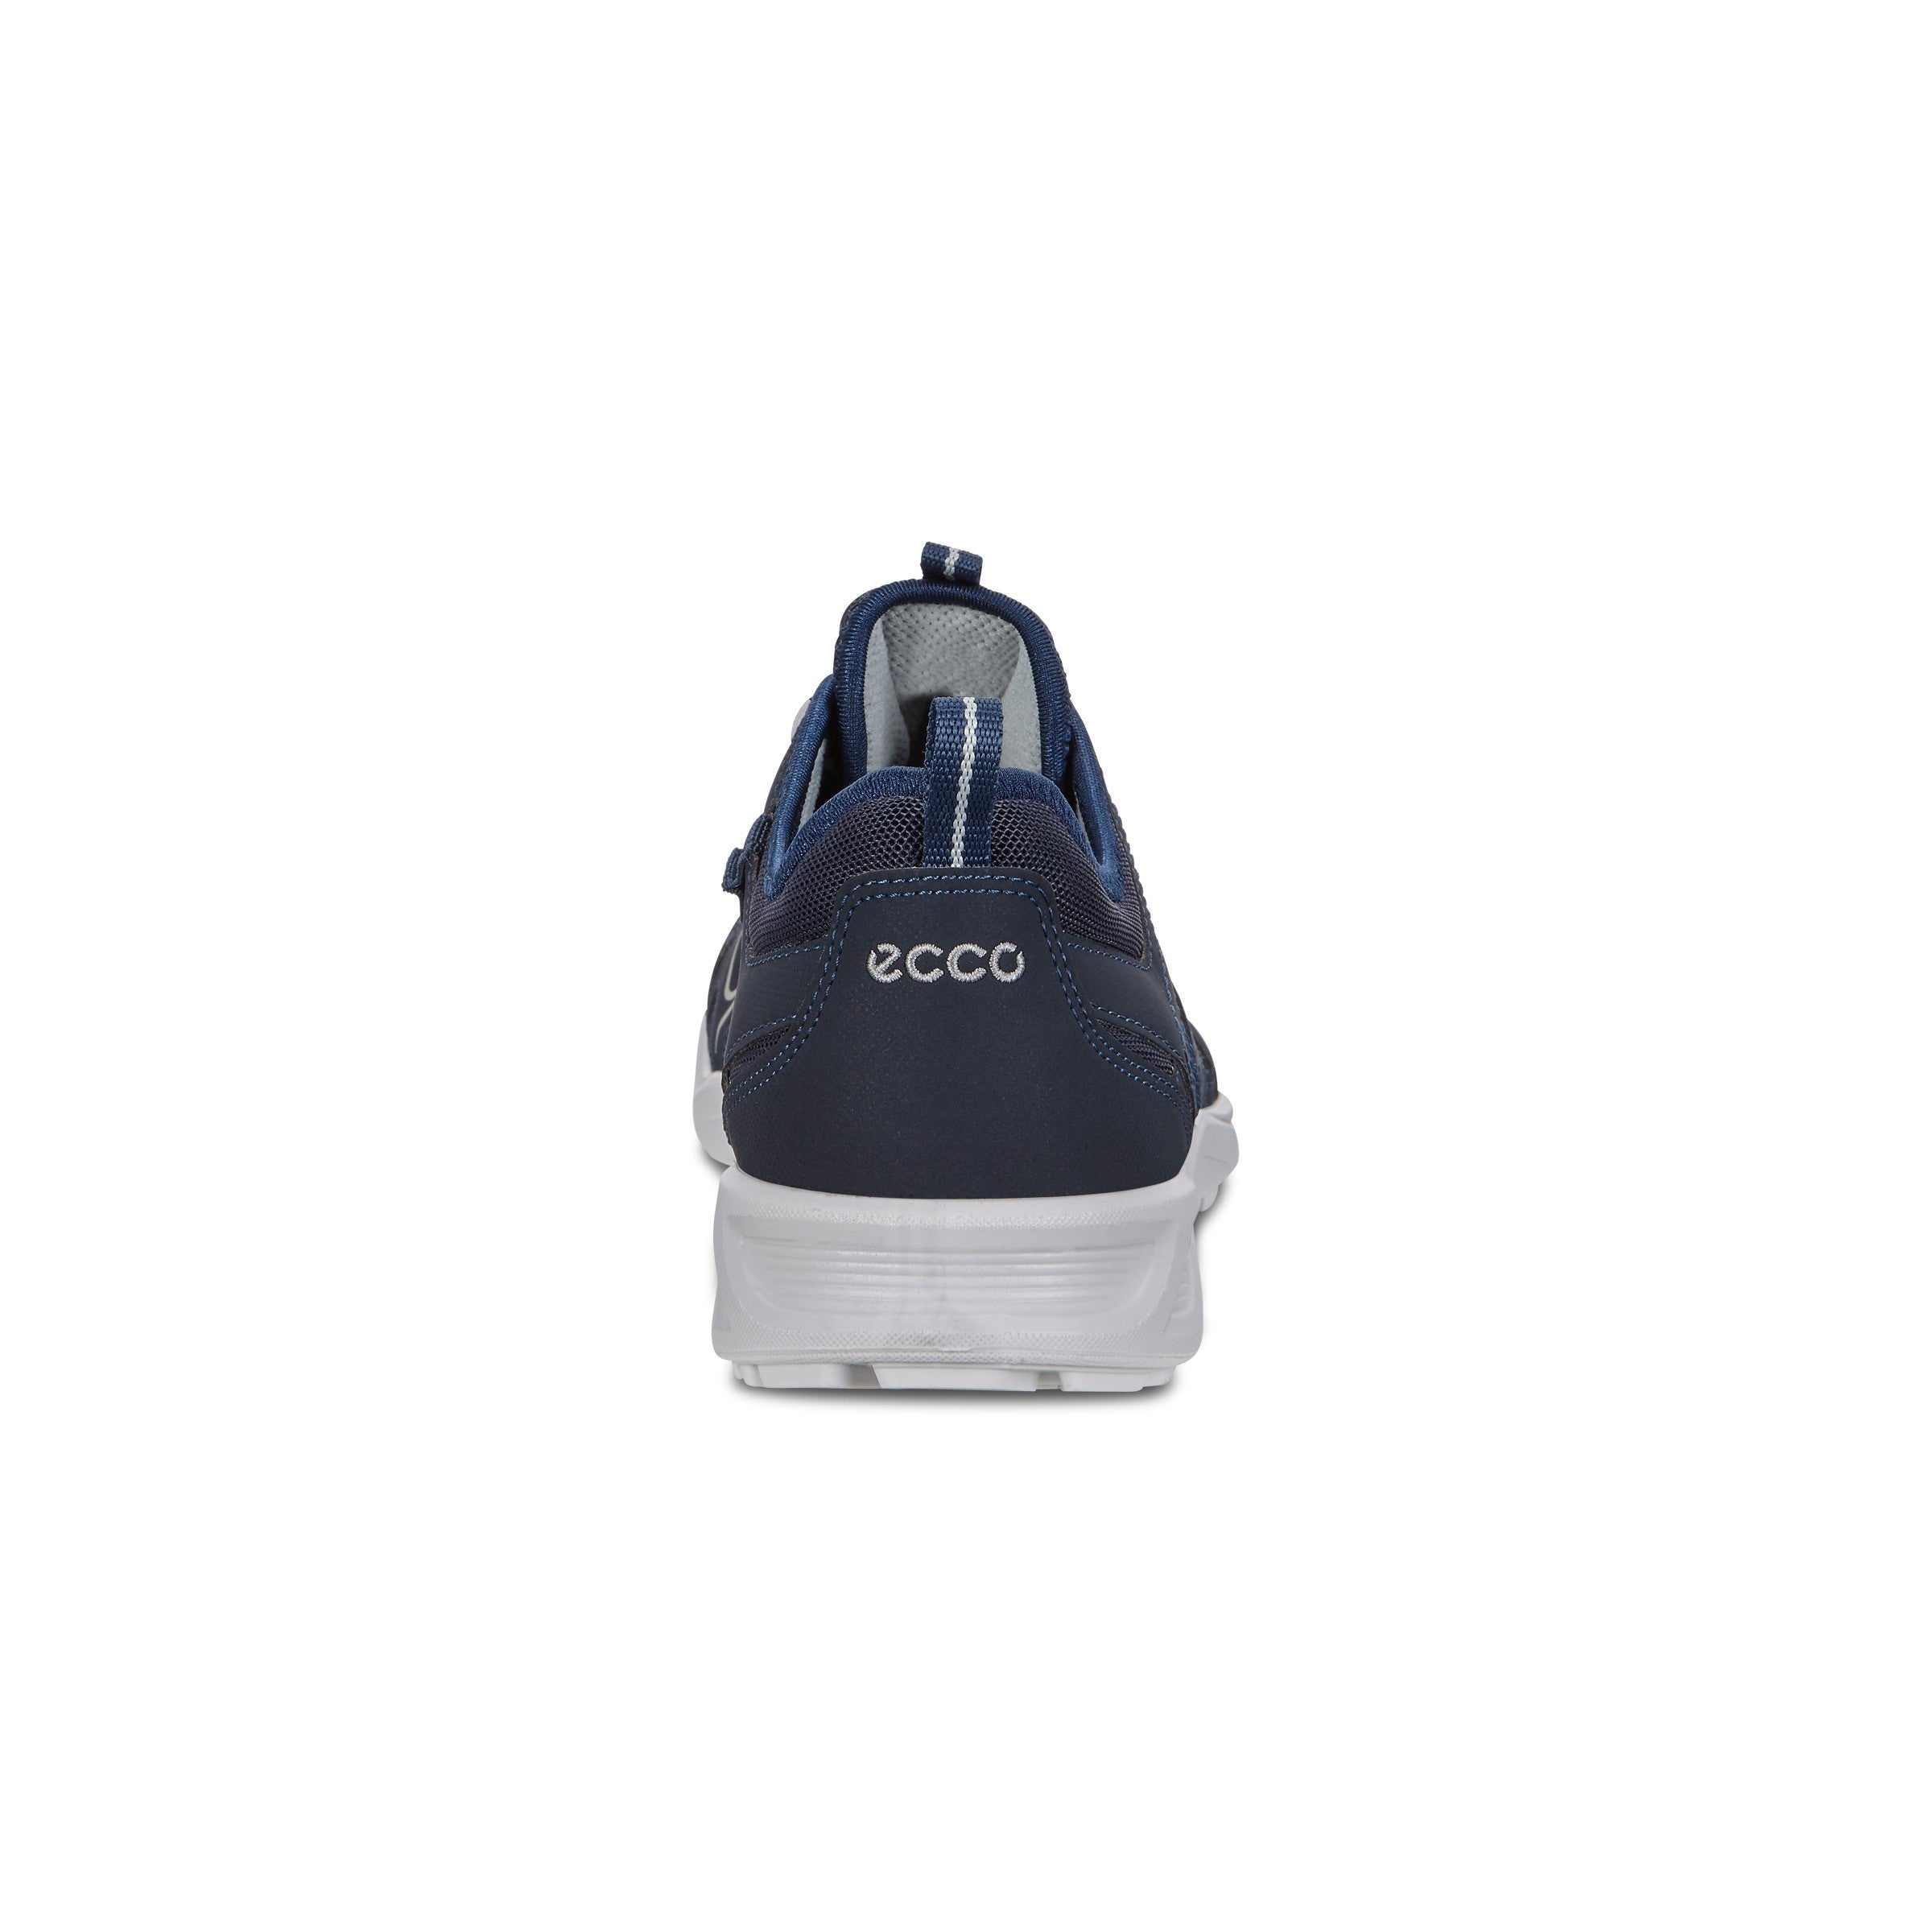 Ecco Terracruise LT 825774 51406 Mens Marine Blue Textile Arch Support Elasticated Shoes